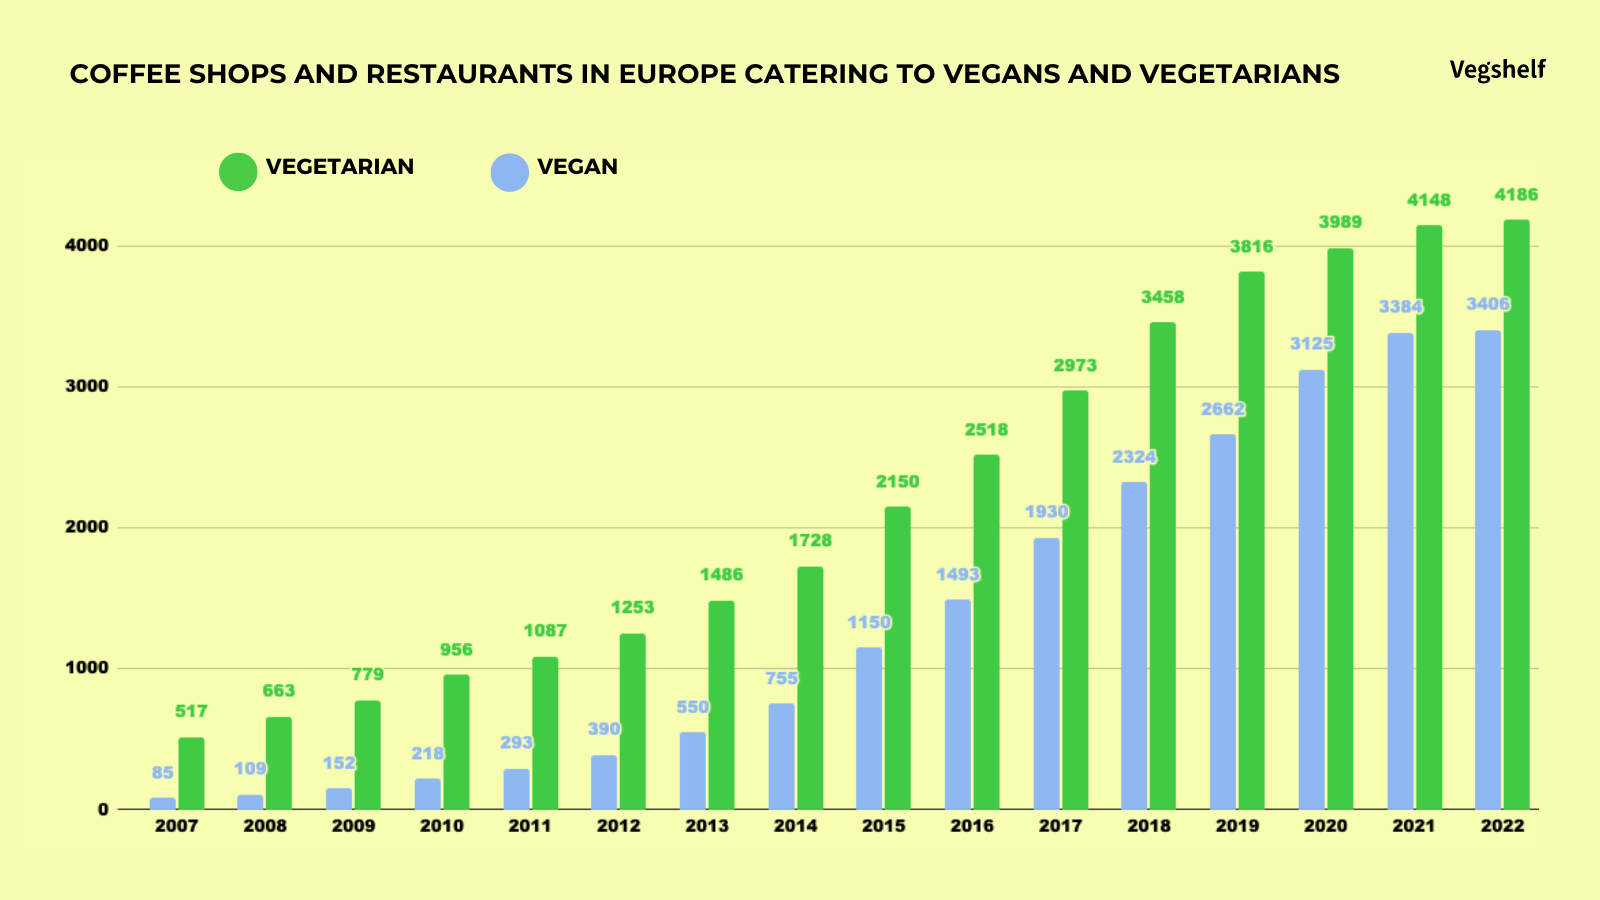 Vegan and vegetarian coffee shops and restaurants in Europe